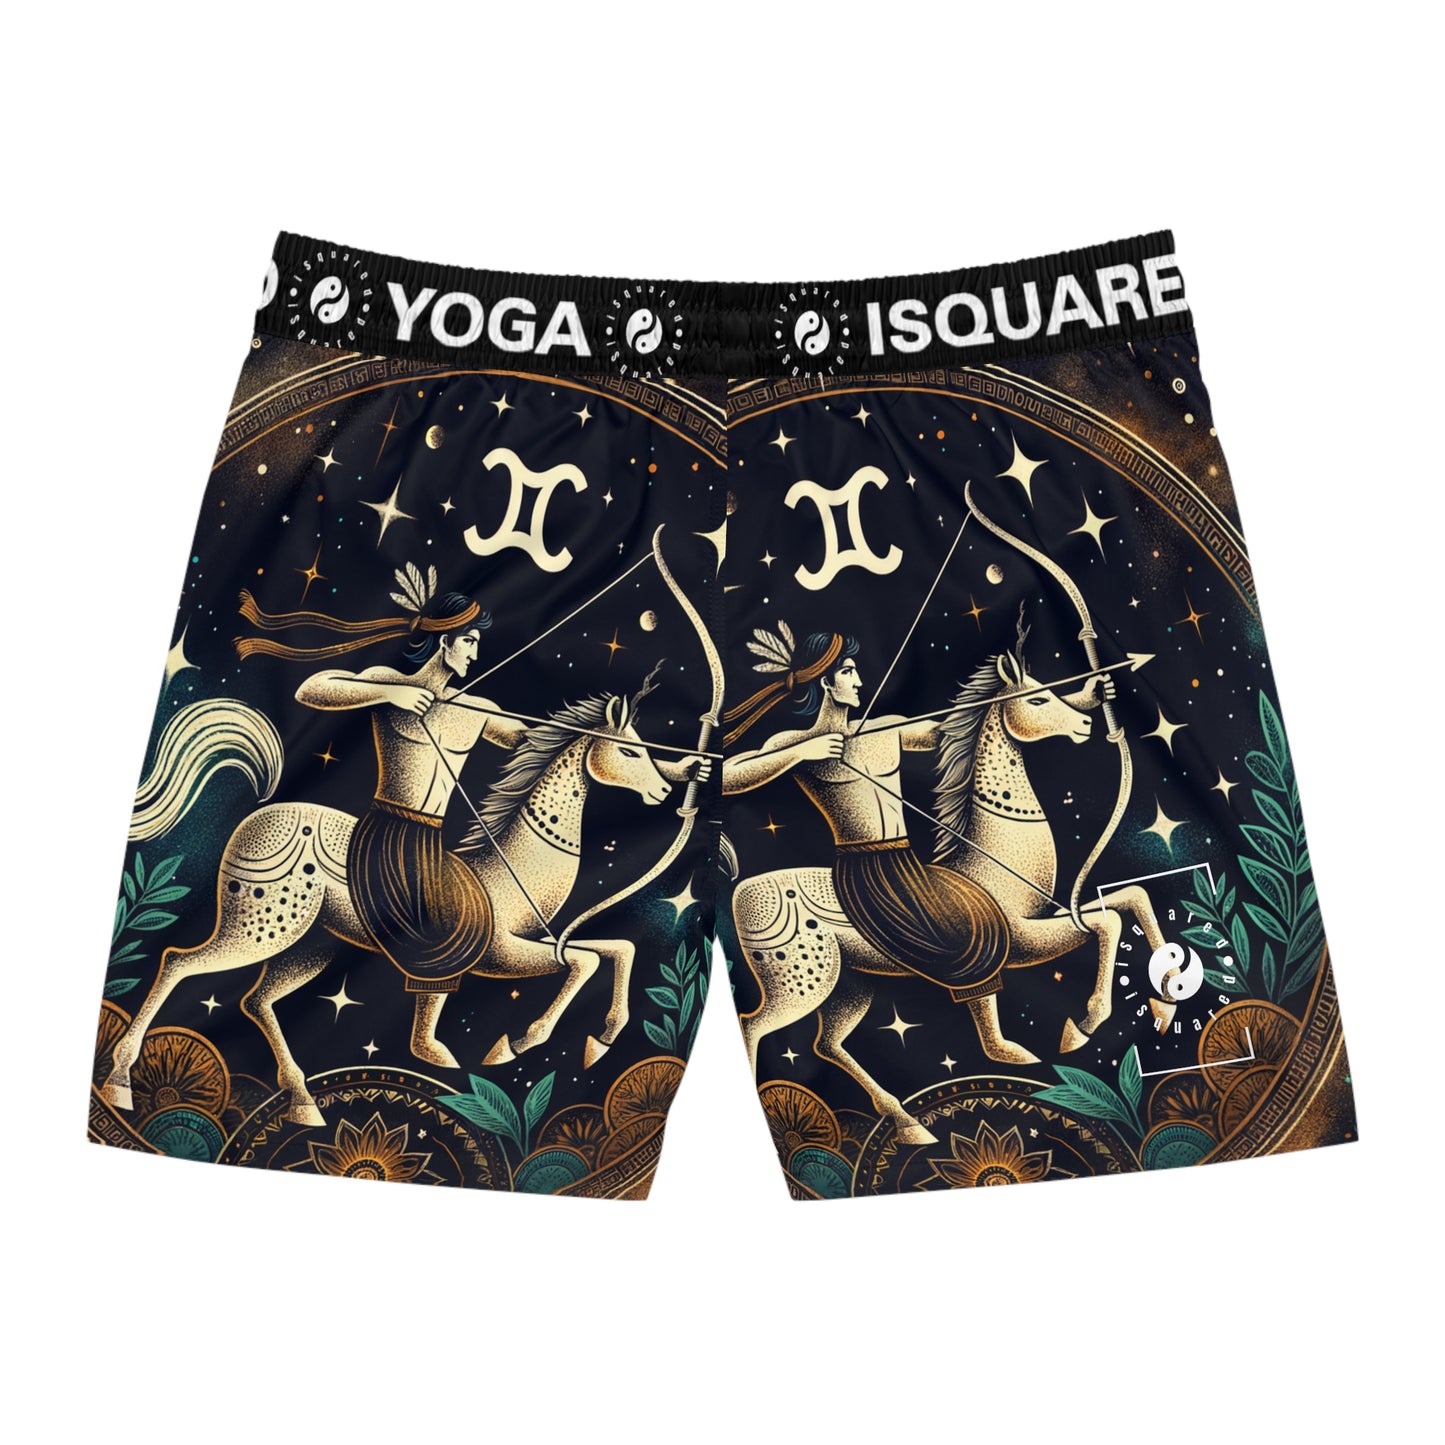 Sagittarius Emblem - Swim Shorts (Mid-Length) for Men